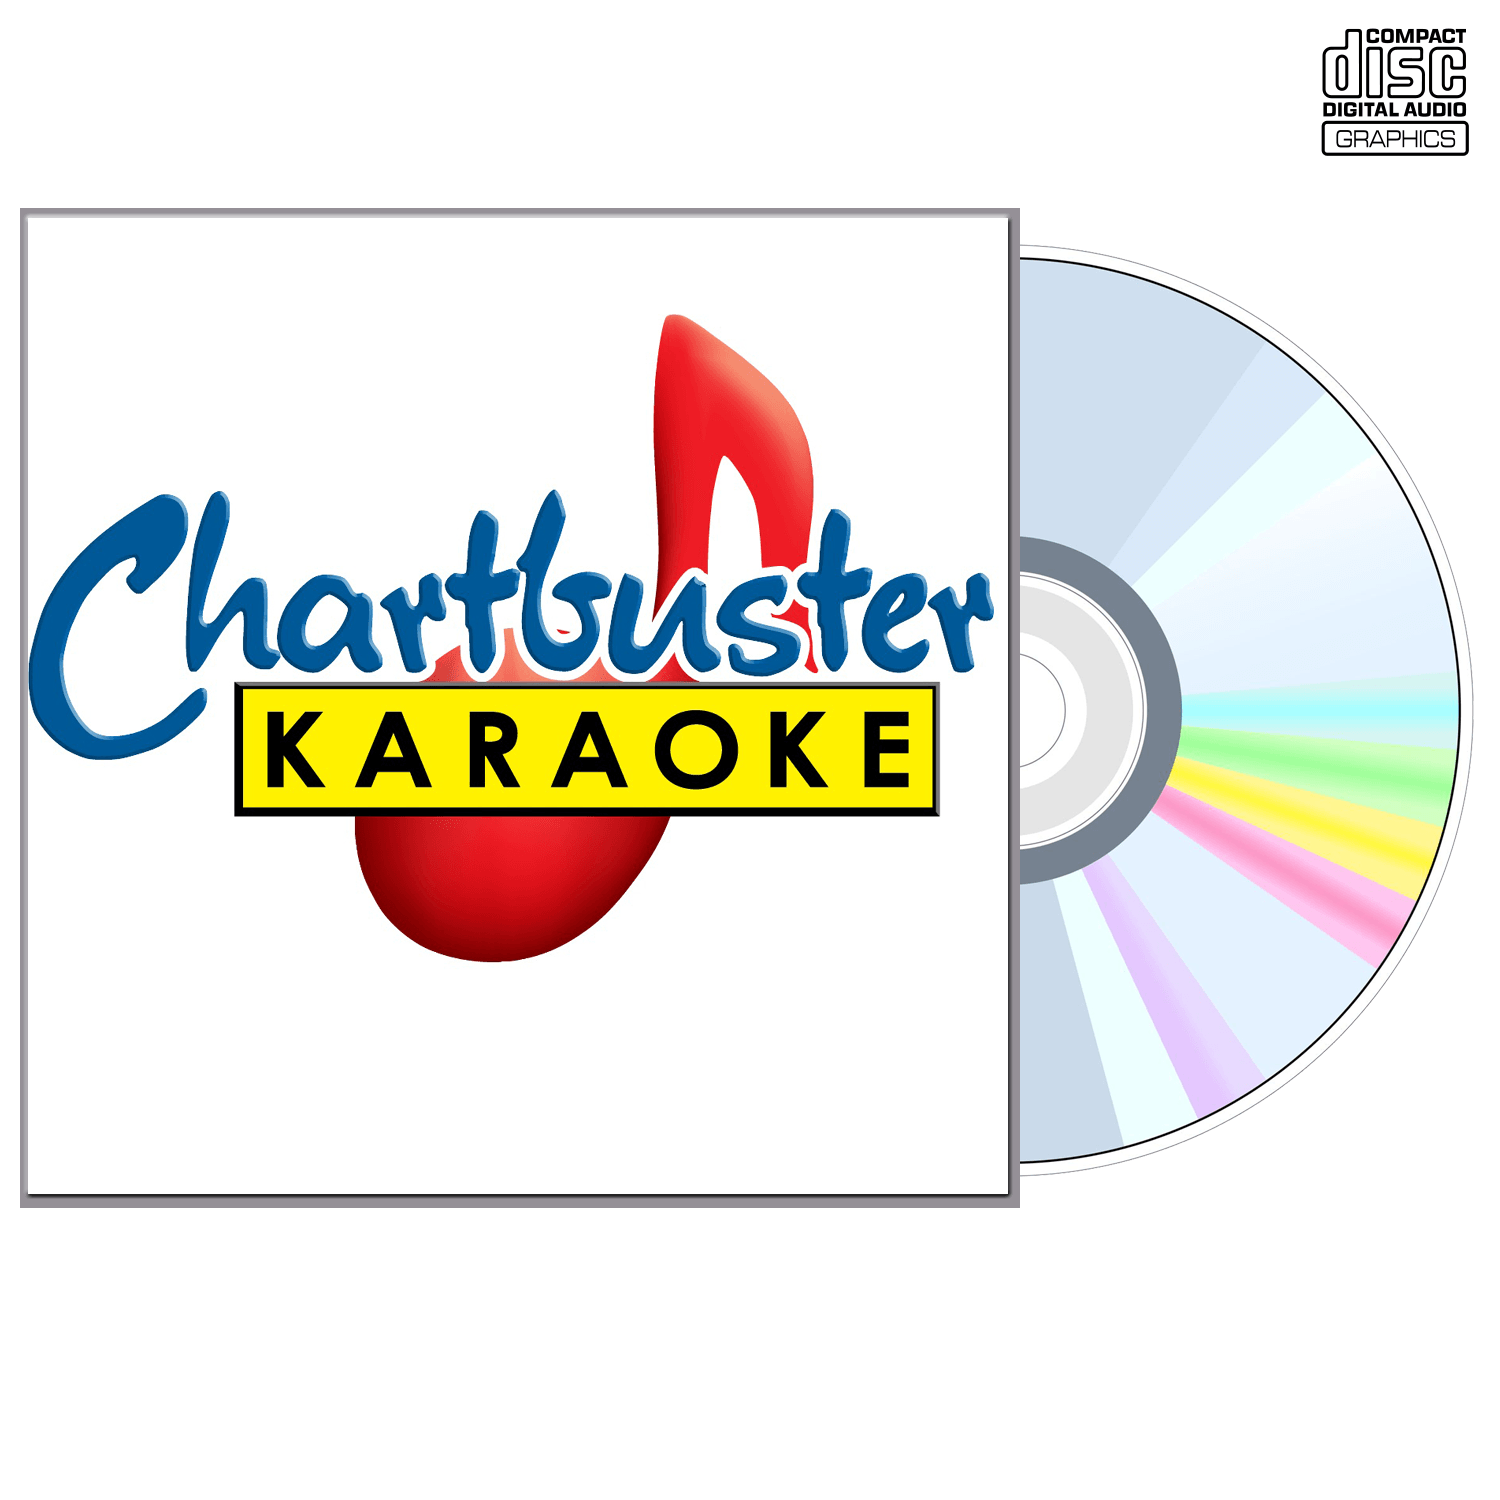 Travis Tritt Vol 3 - CD+G - Chartbuster Karaoke - Karaoke Home Entertainment